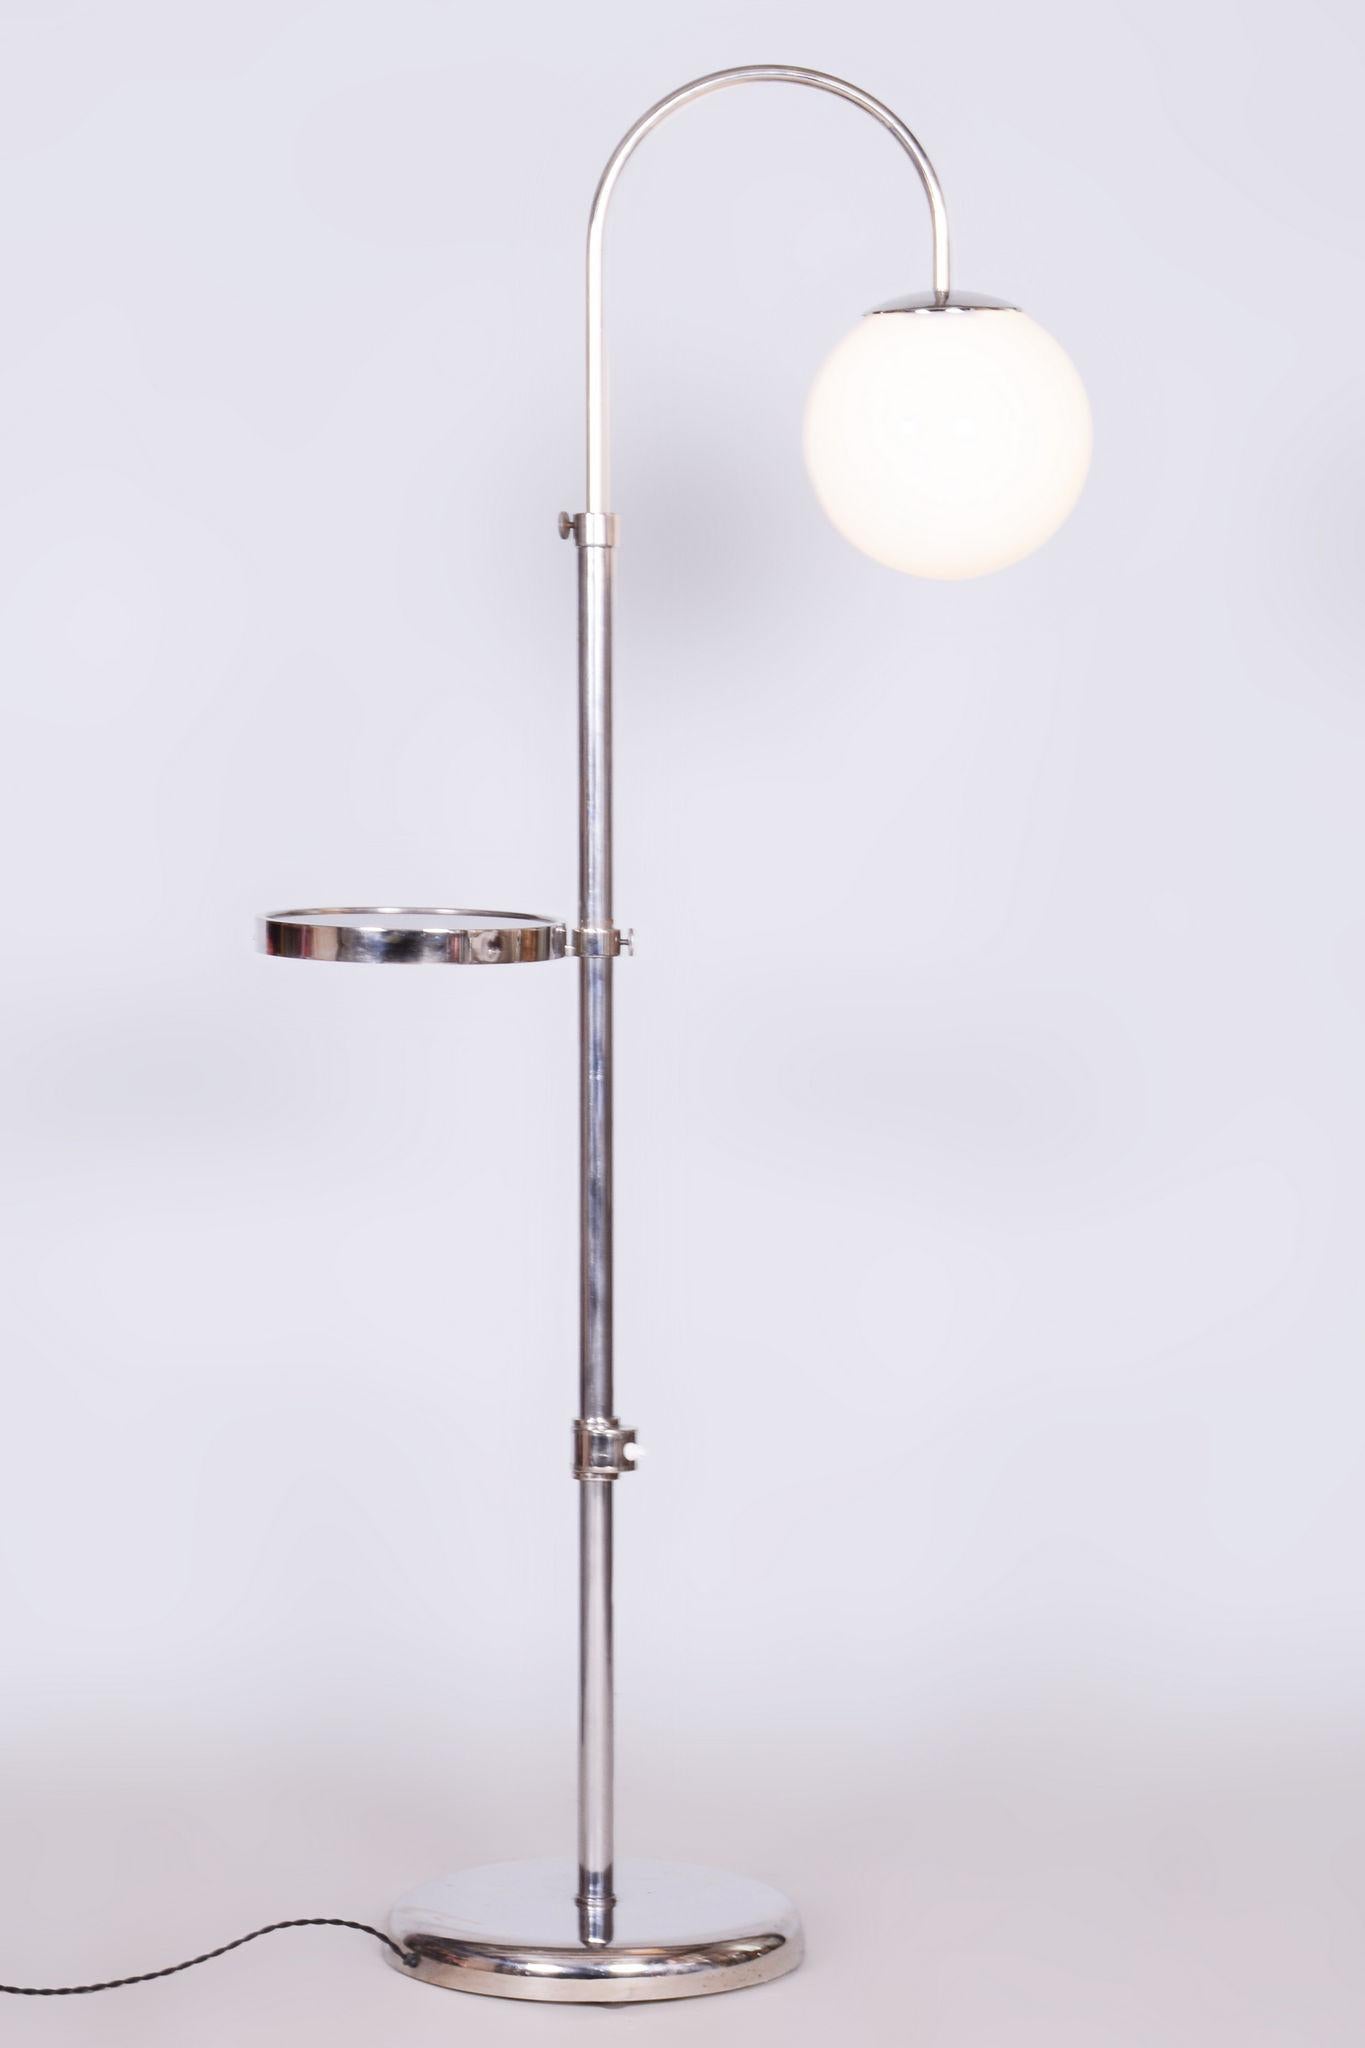 Restored Chrome Floor Lamp, Steel, Milk Glass, Adjustable Height, Czech, 1930s For Sale 4